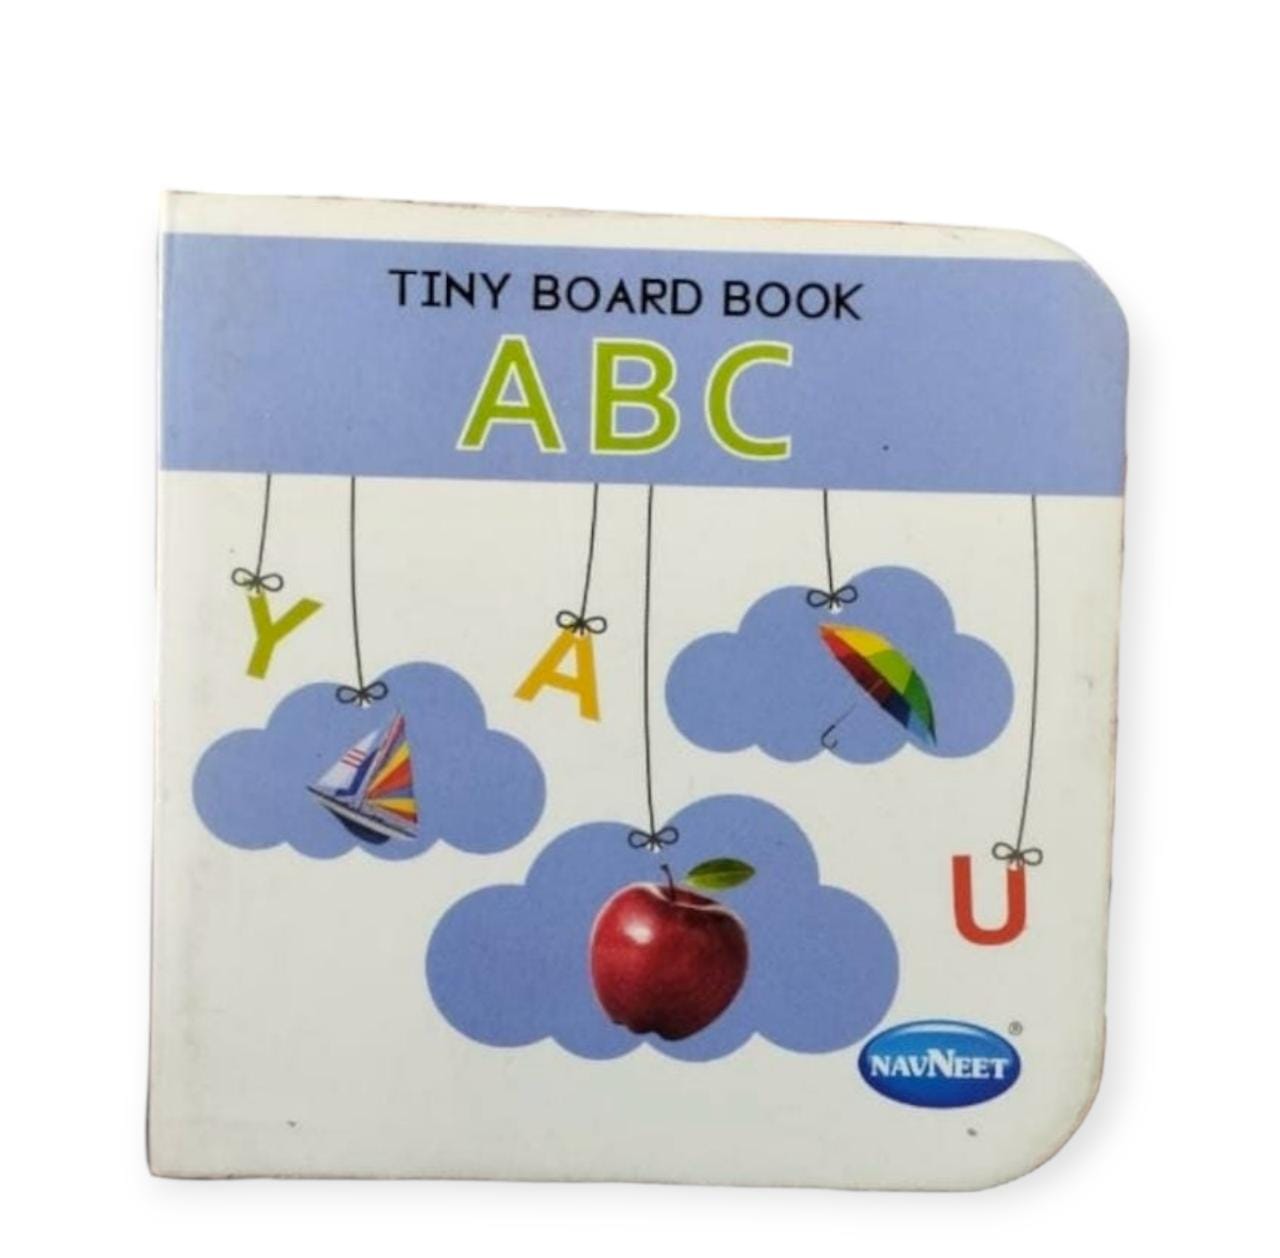 Tiny ABC book 